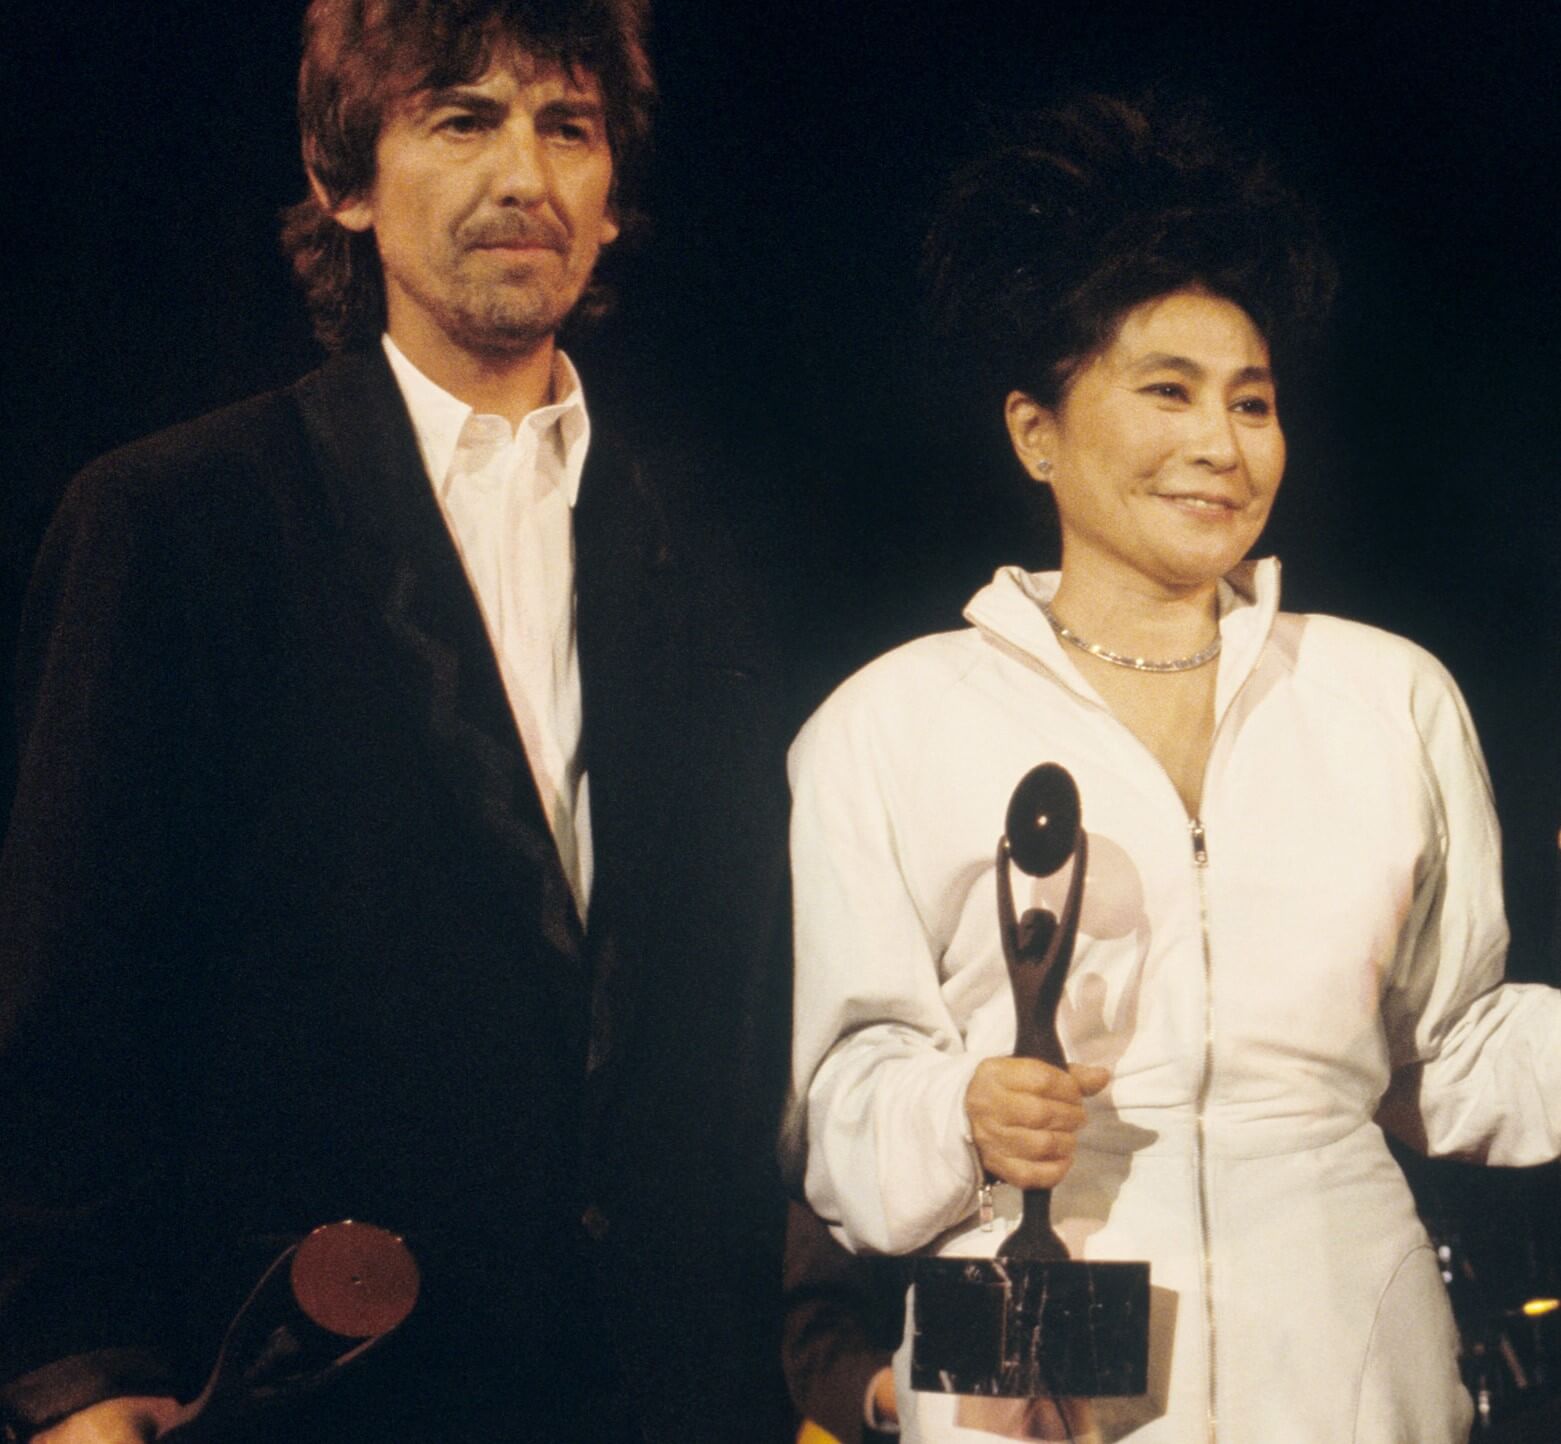 George Harrison standing next to Yoko Ono